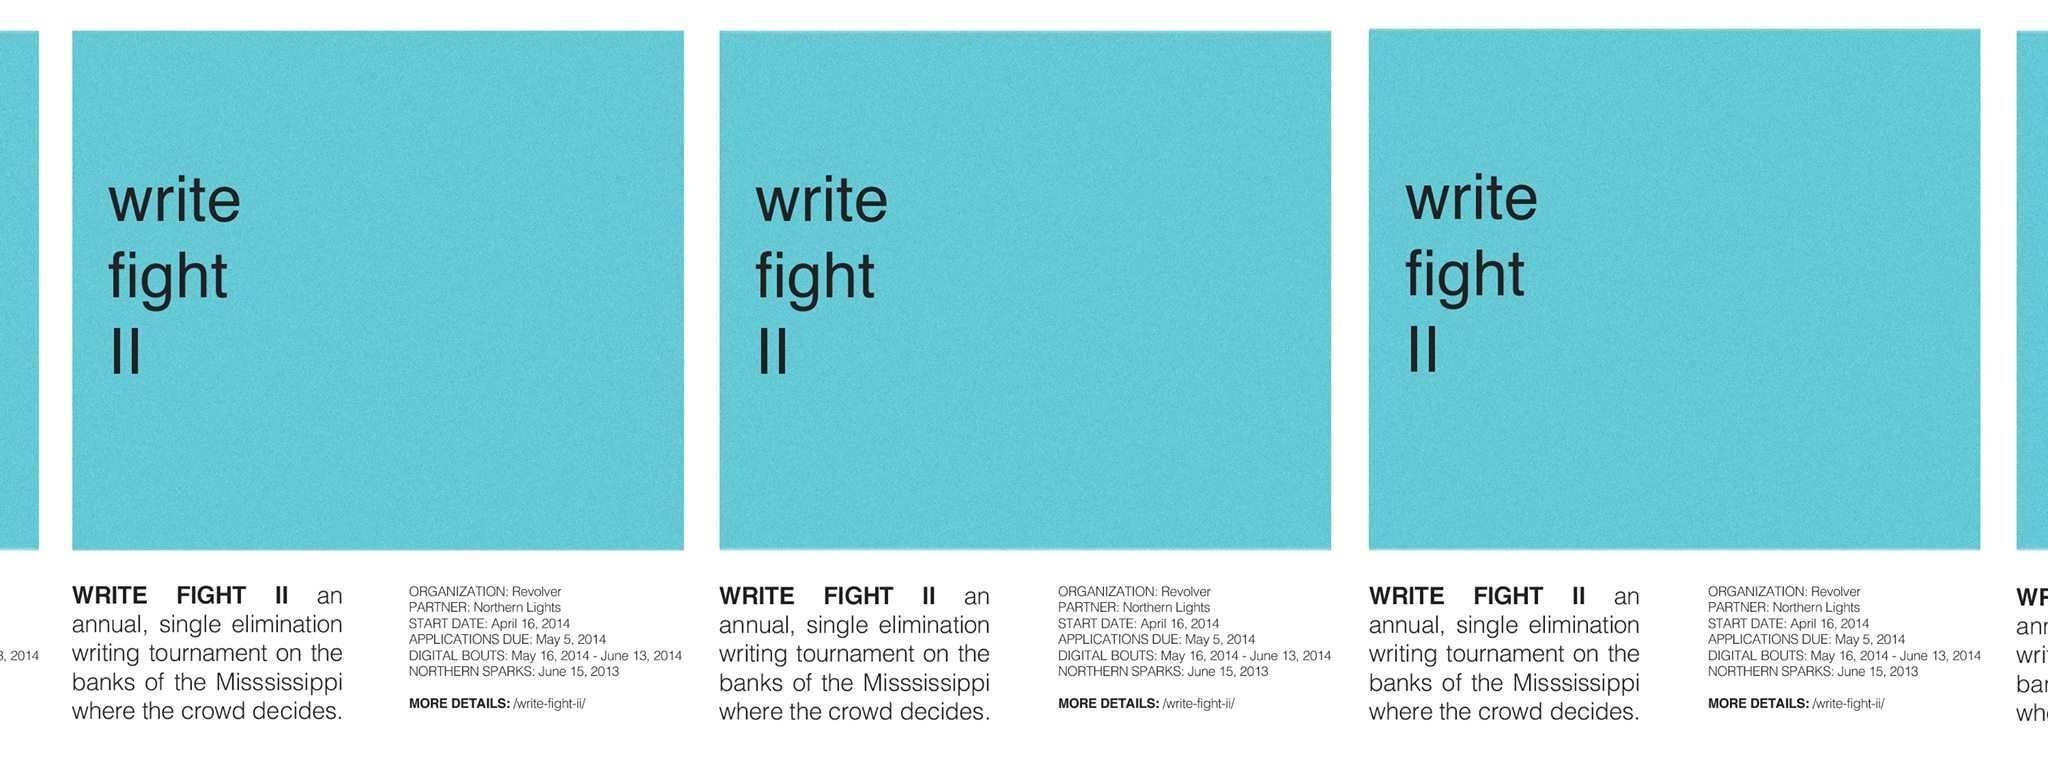 Write Fight II